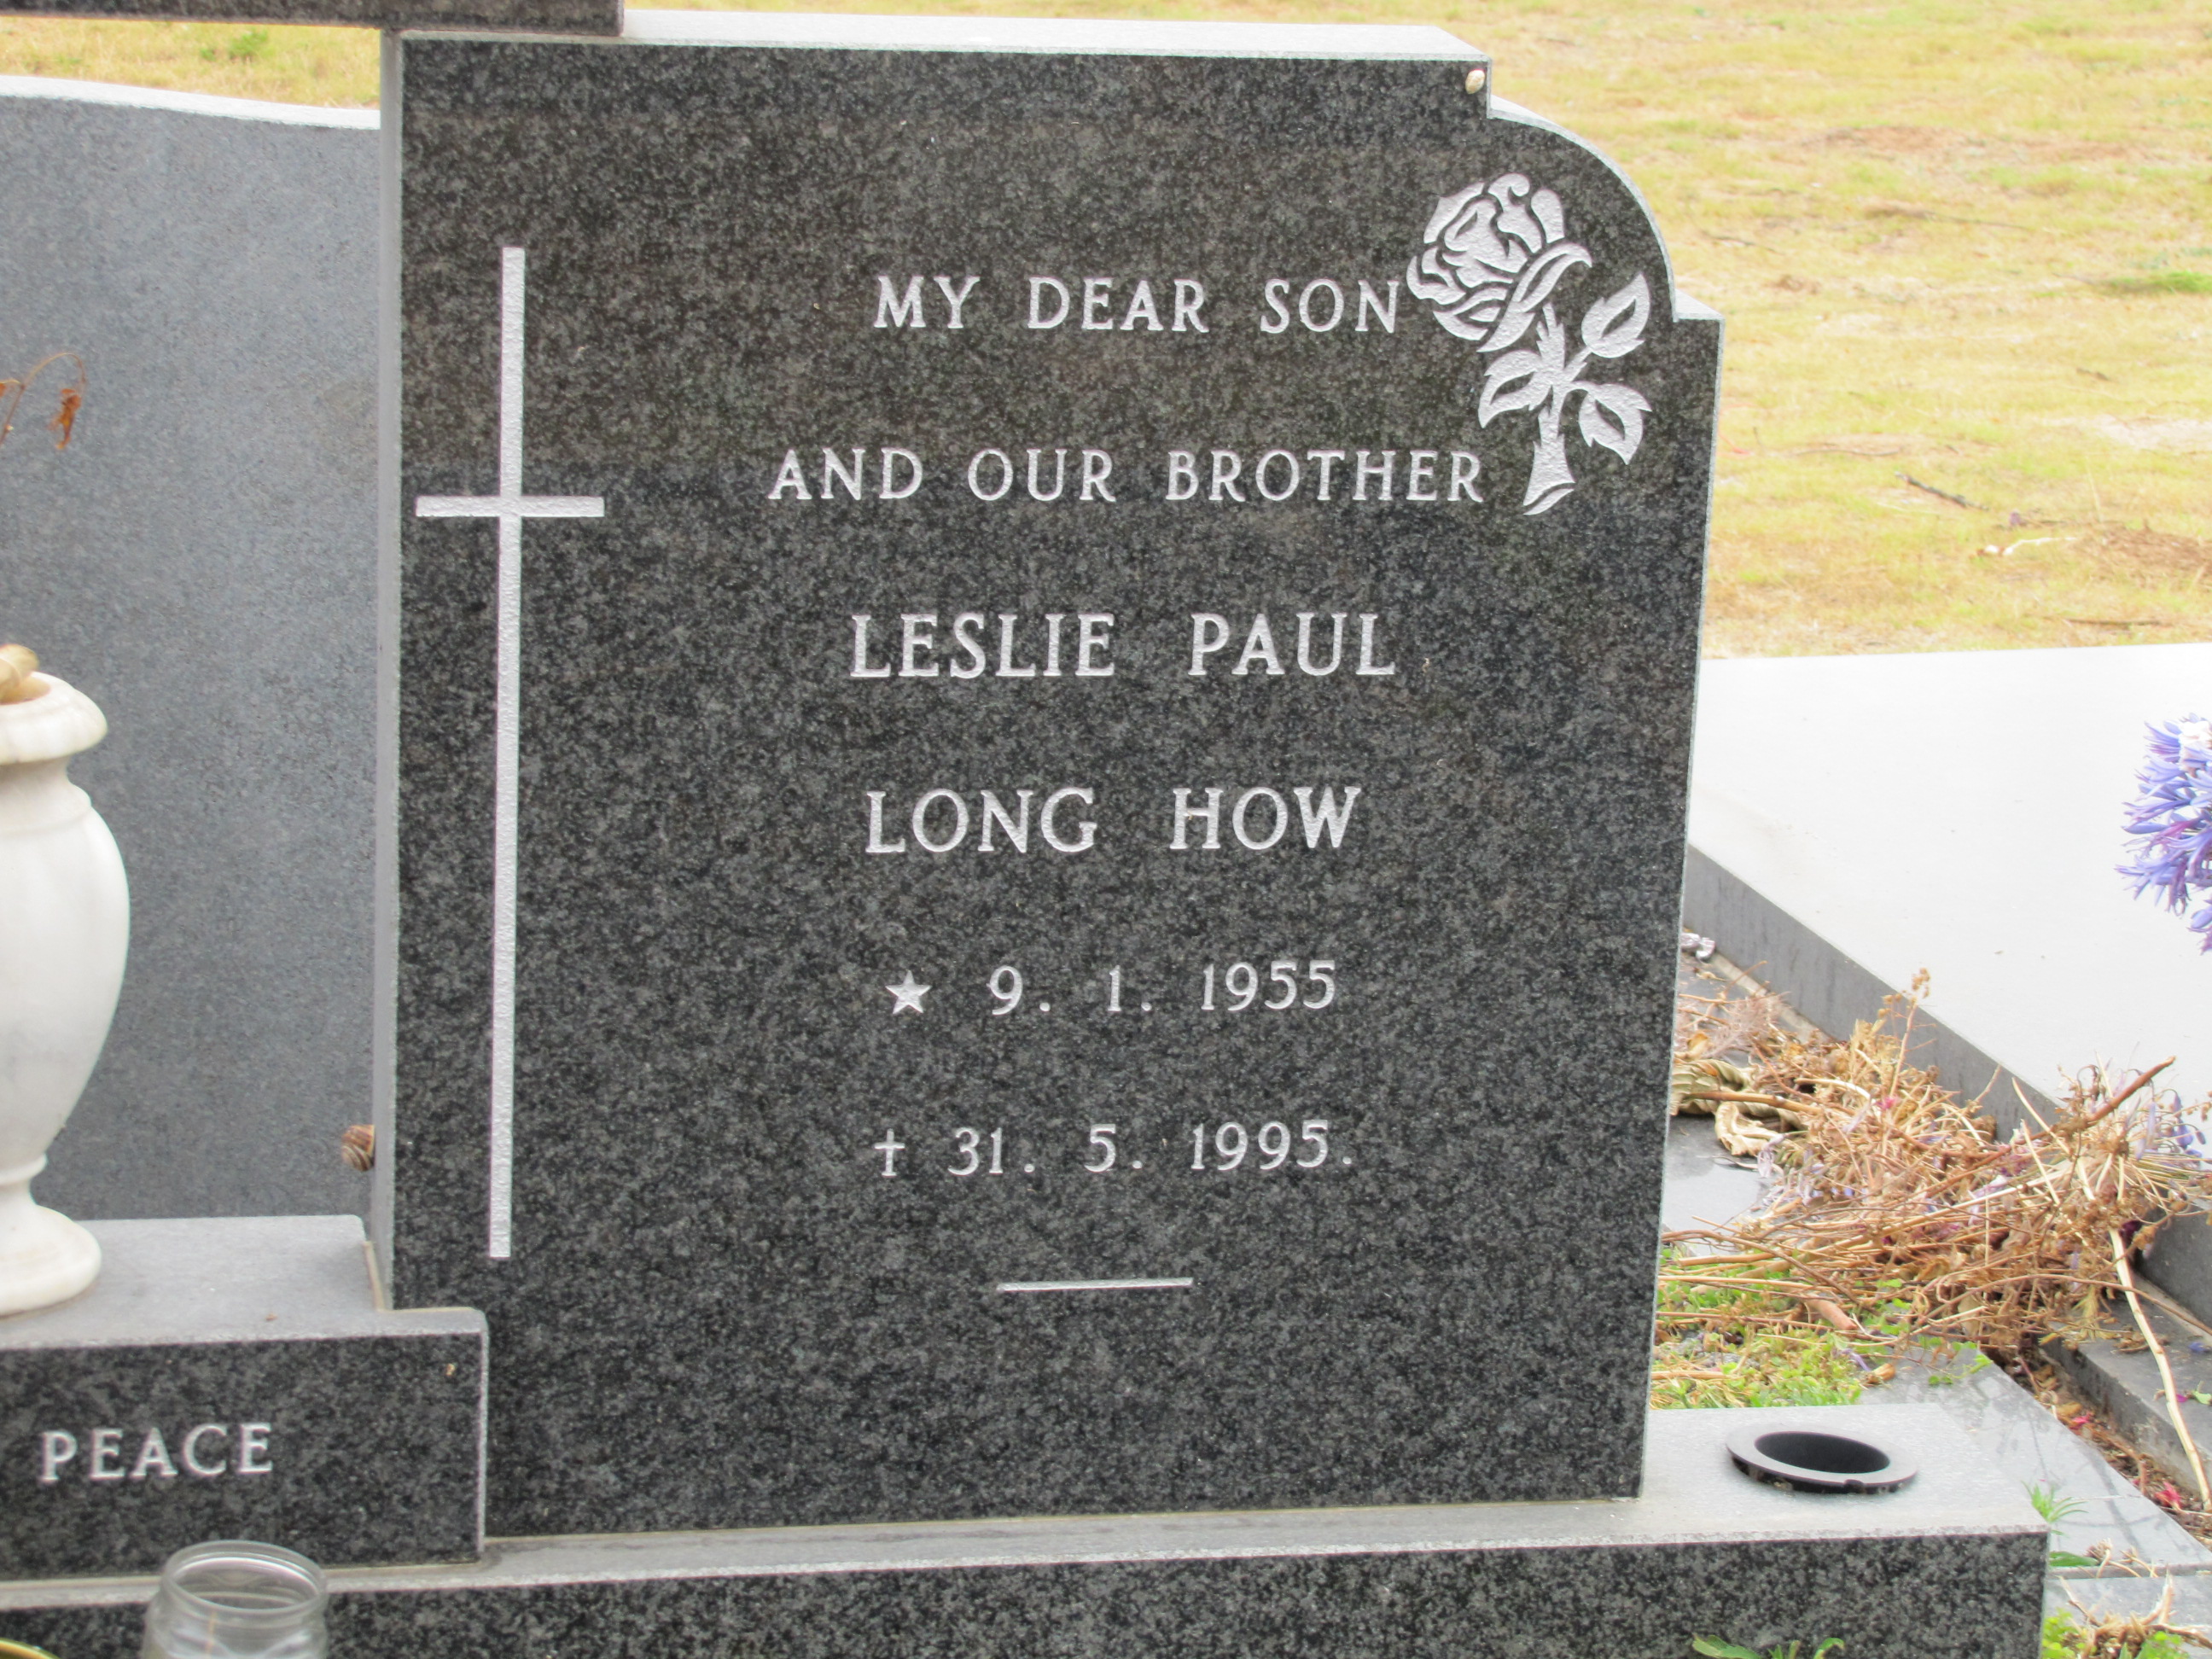 LONG HOW Leslie Paul 1955-1995